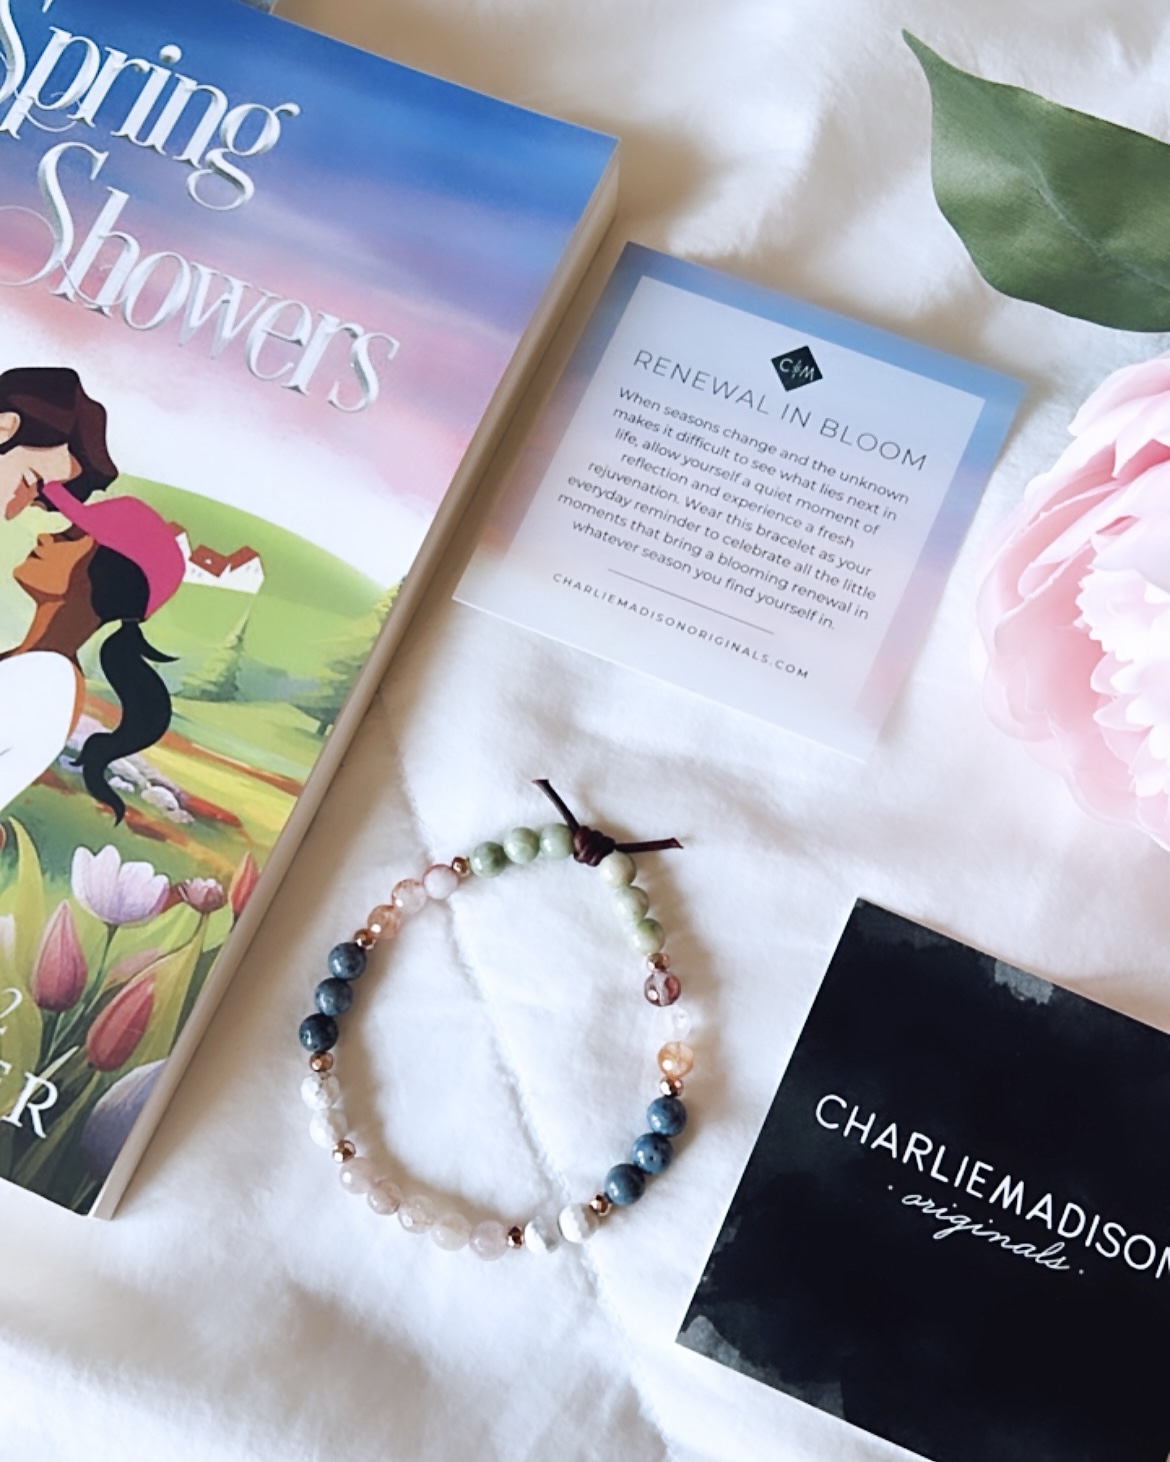 A Spring themed romance novel, Spring Showers by Sarah Dressler, pairs with a custom designed gemstone bracelet by jewelry designer Charlie Madison Originals